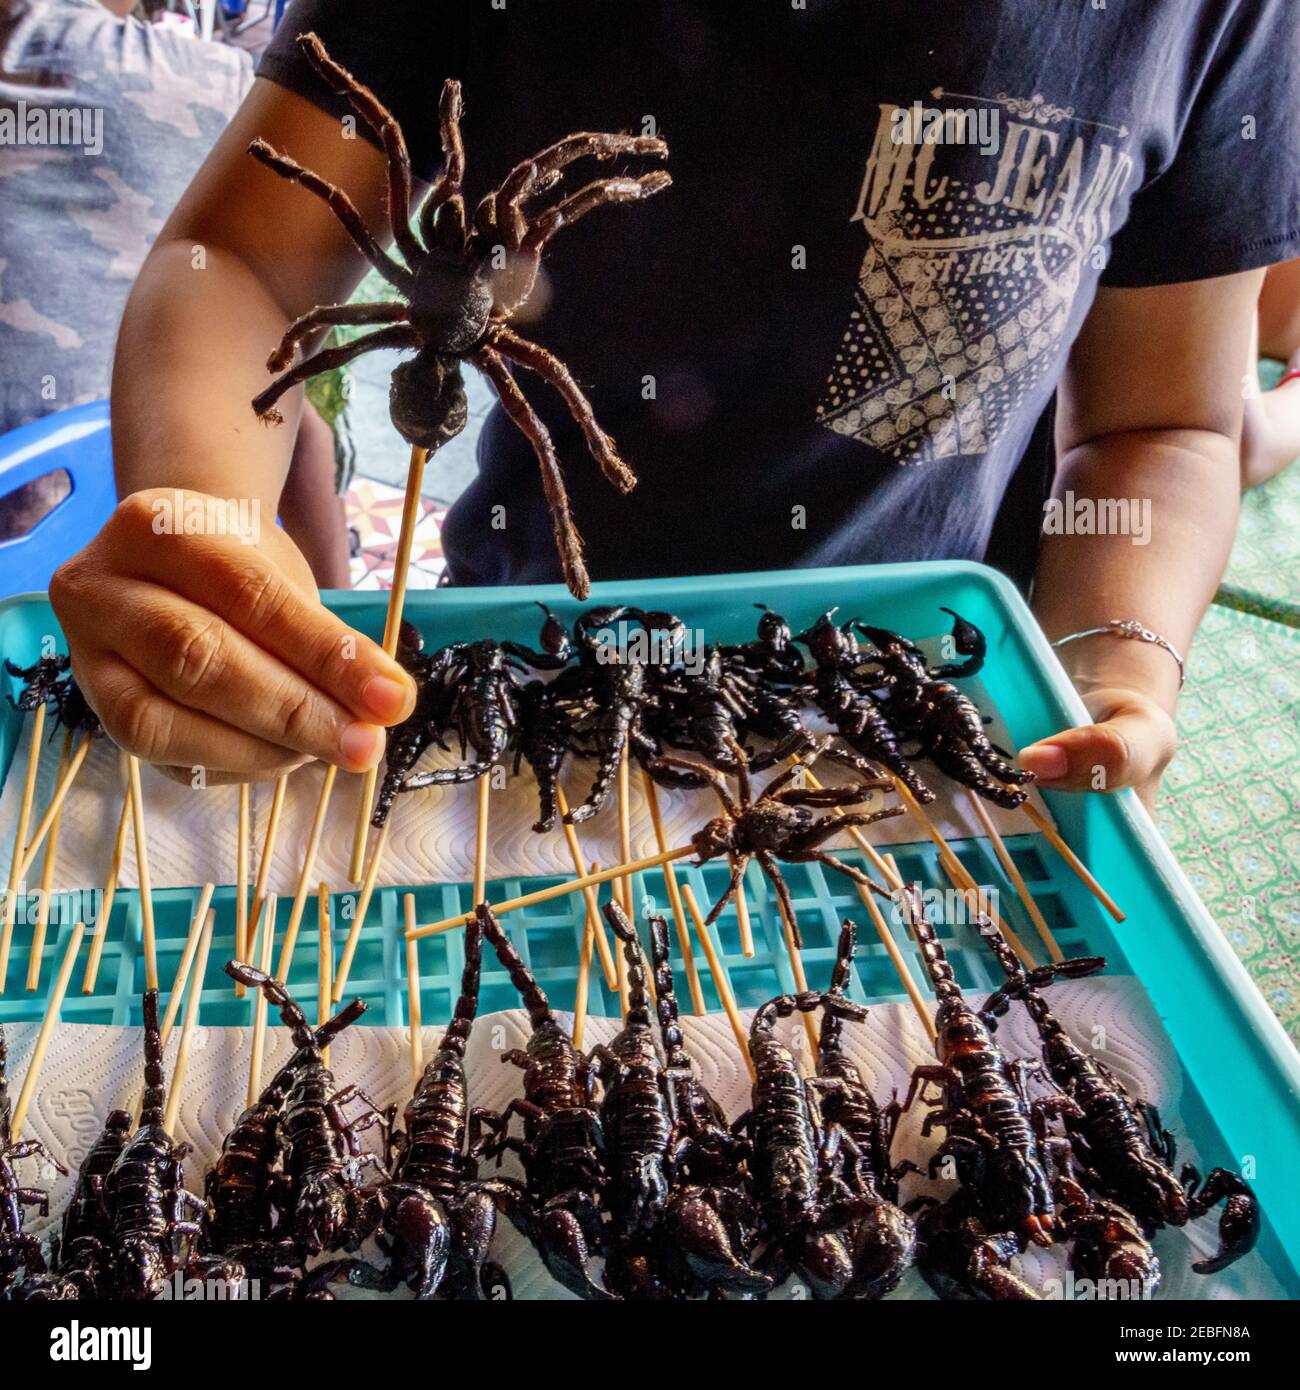 A street vendor selling fried scorpions on Khaosan Road in Bangkok, Thailand. Stock Photo